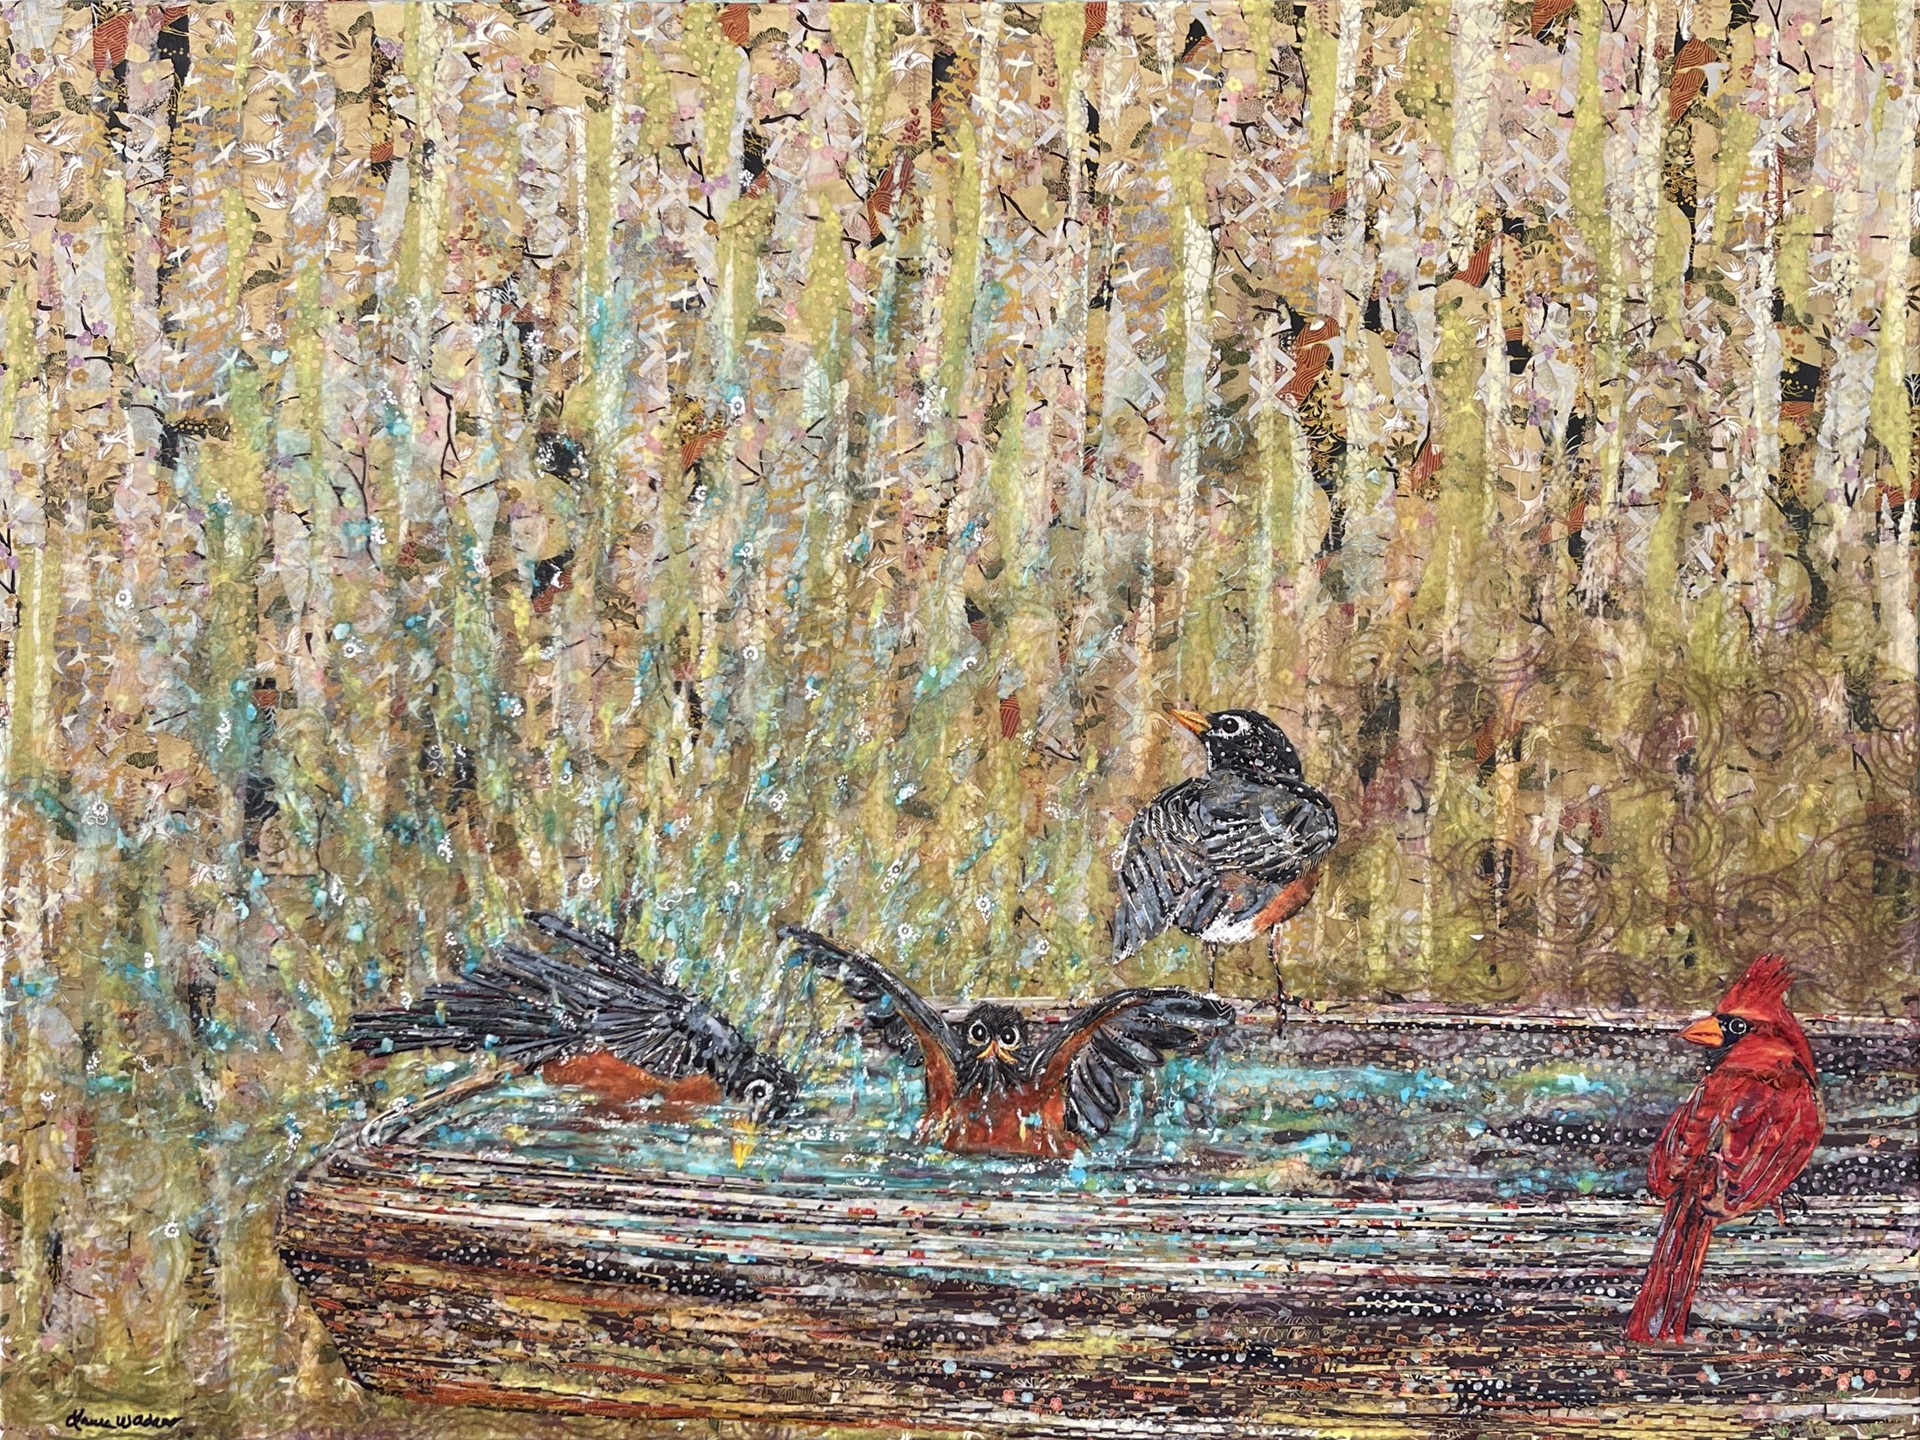 Splashing Robins and Friend by Laura Adams